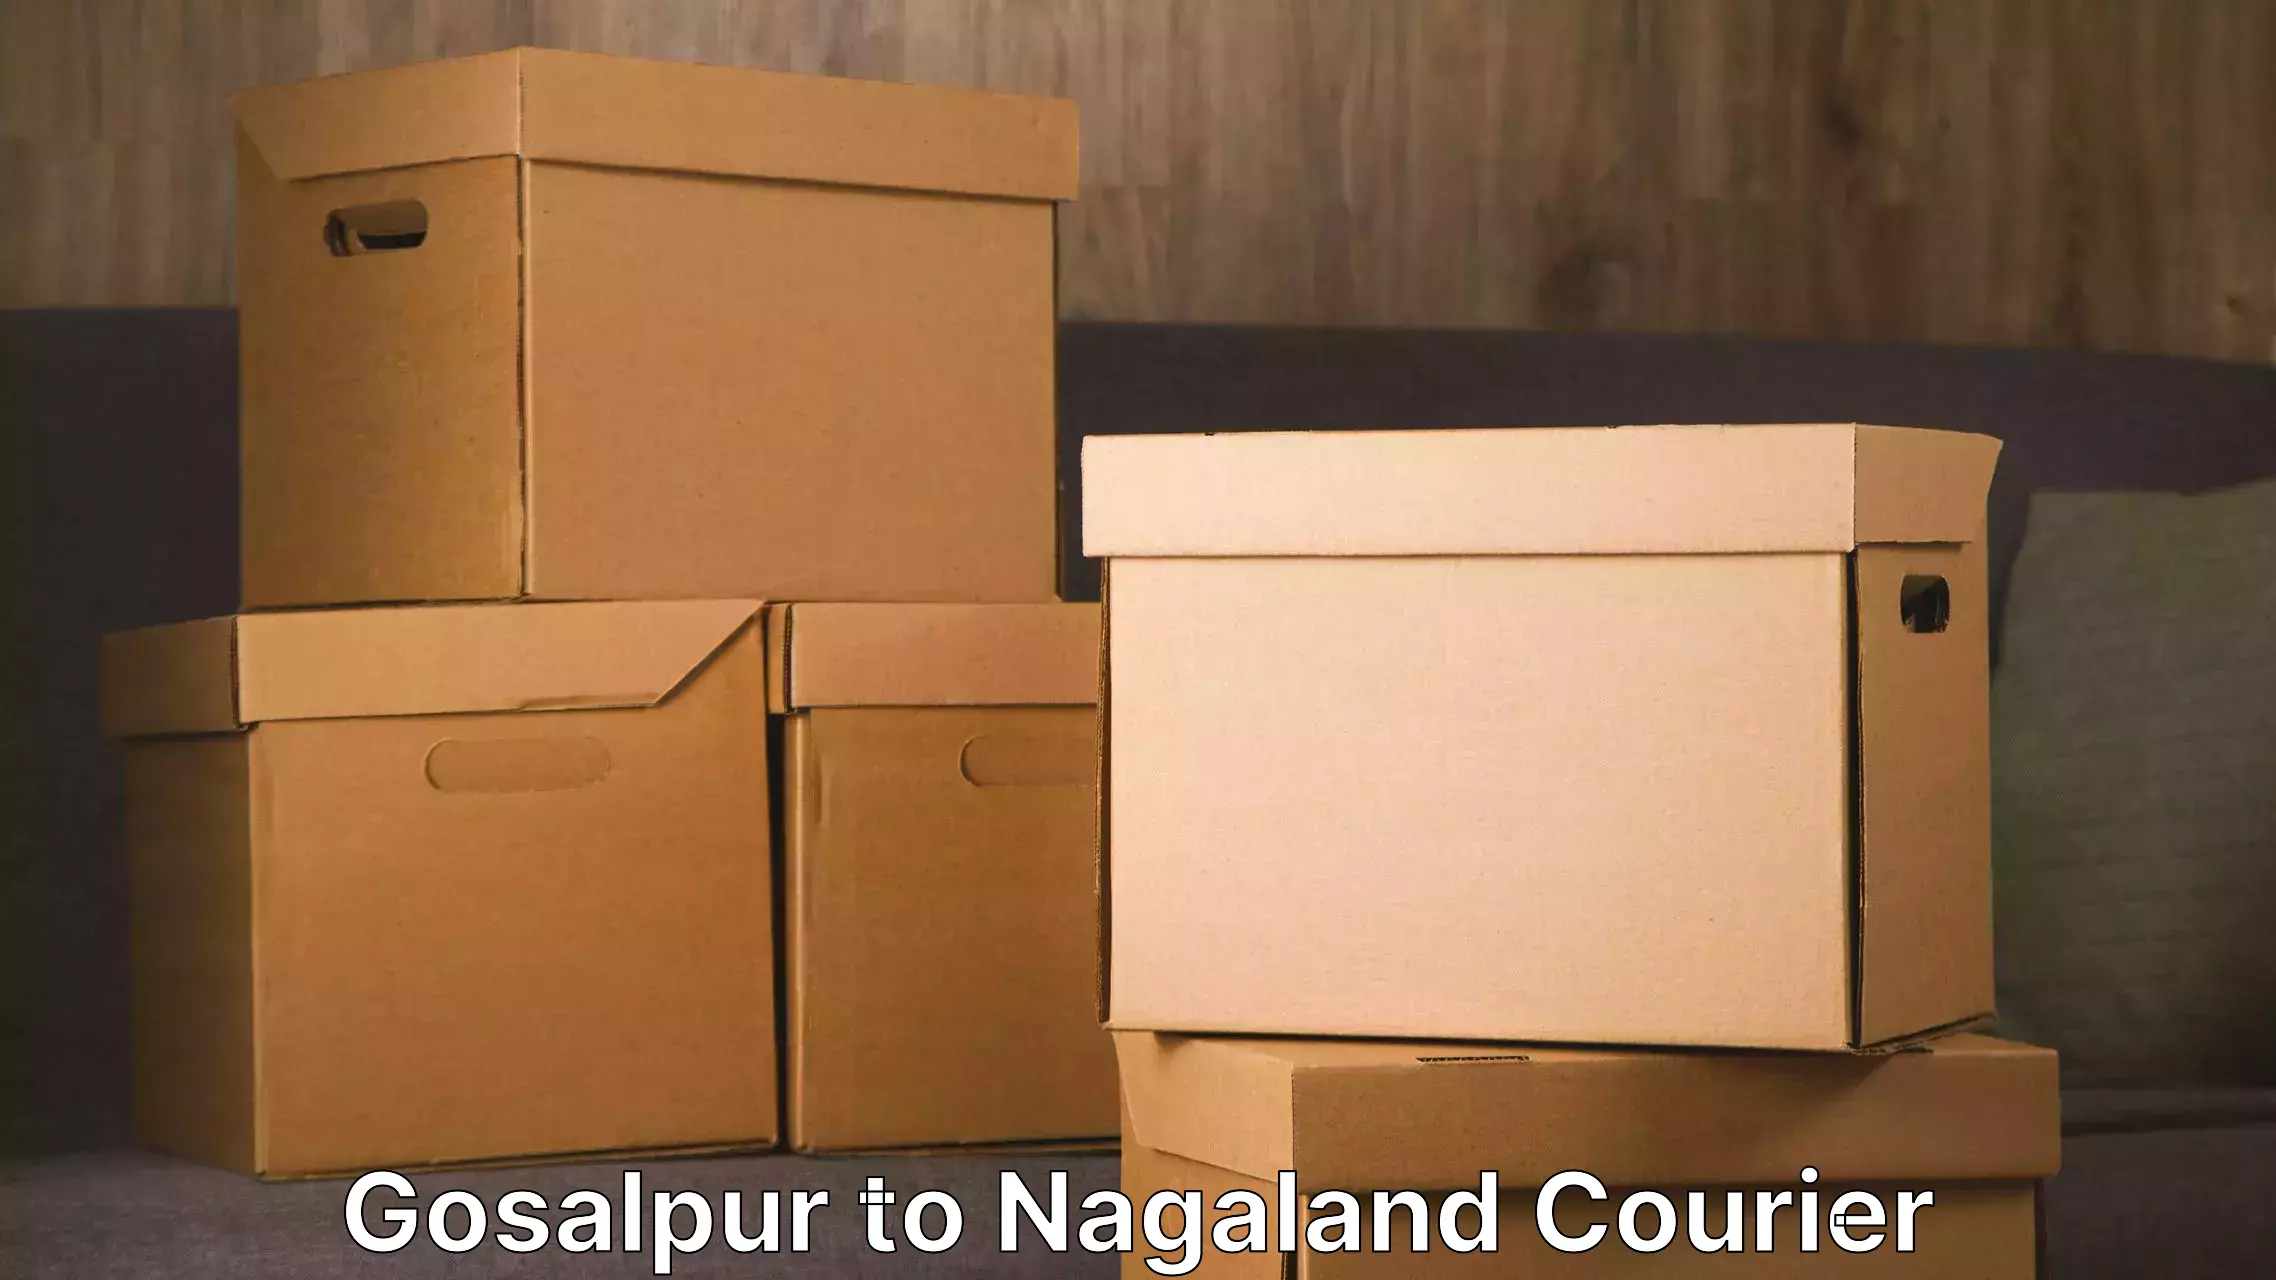 Professional moving company Gosalpur to Nagaland